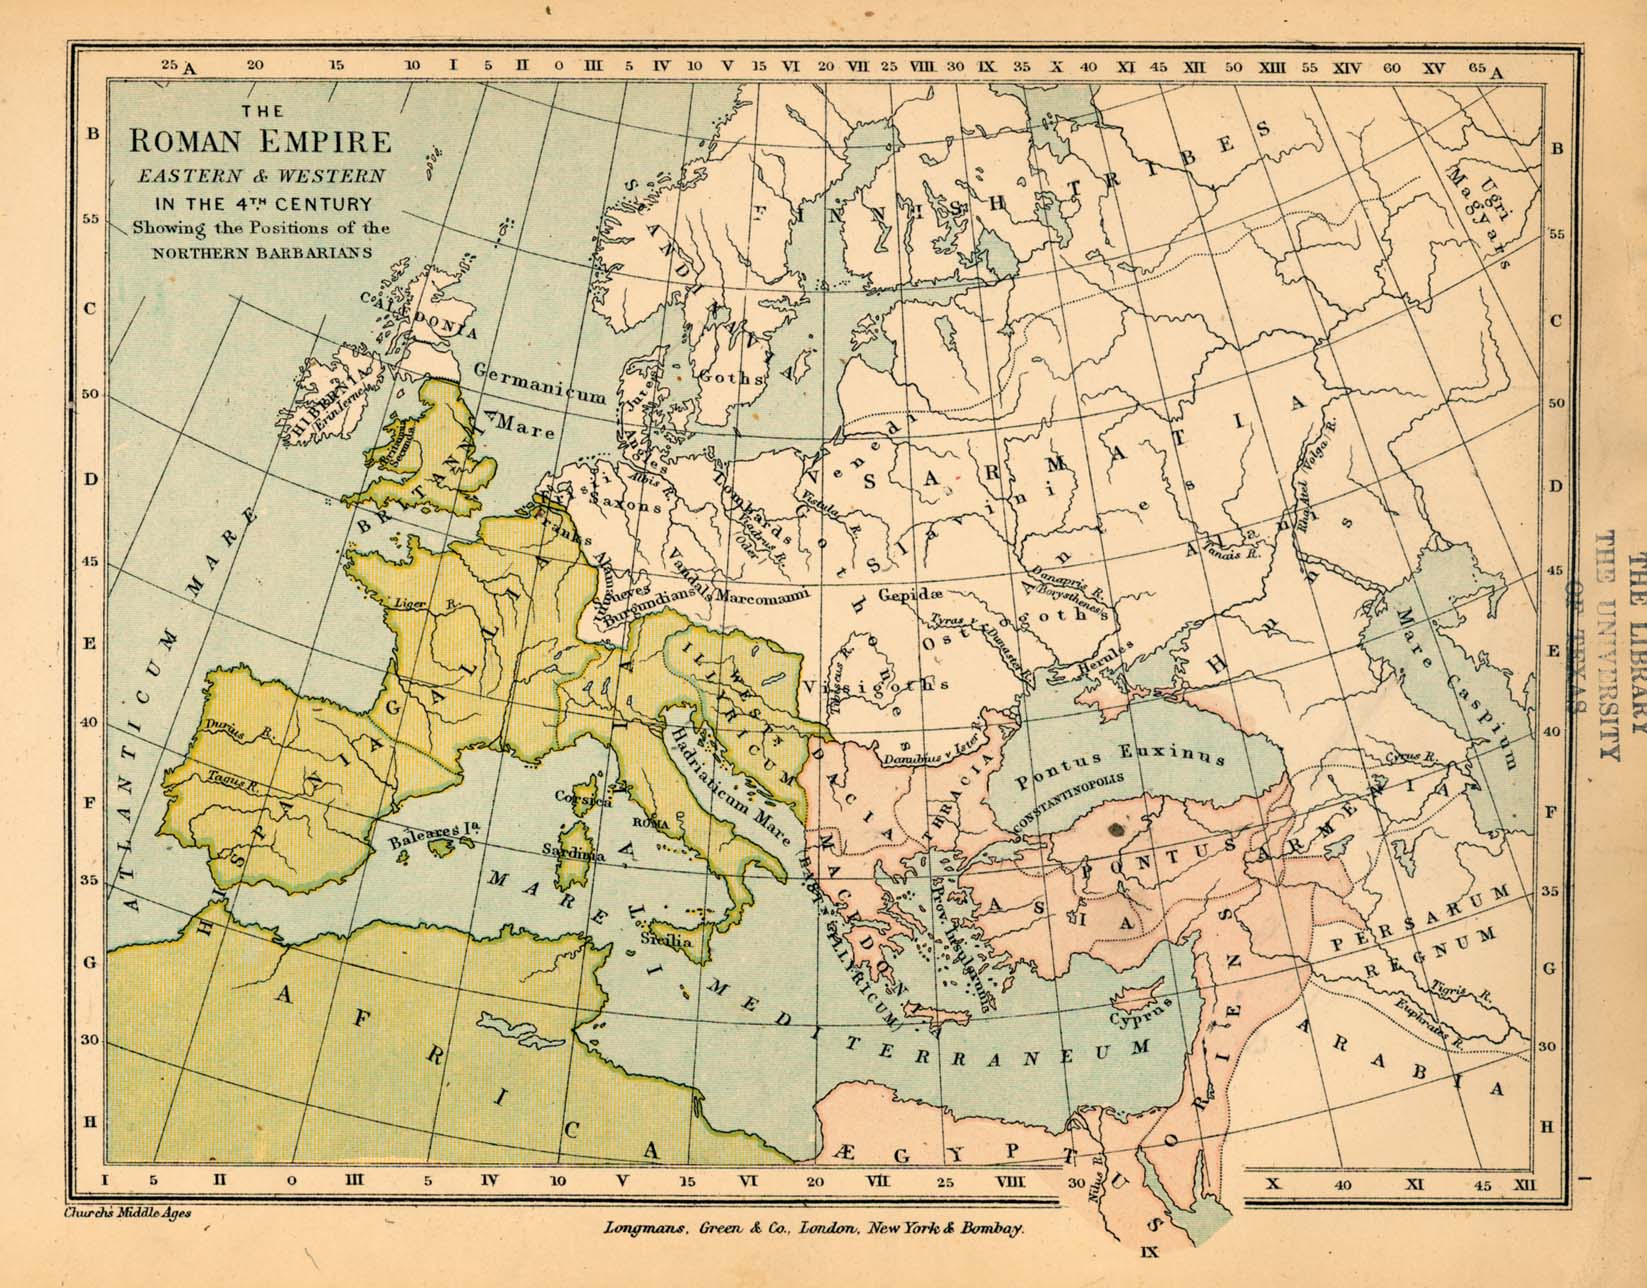 http://www.lib.utexas.edu/maps/historical/colbeck/roman_empire_4_century.jpg